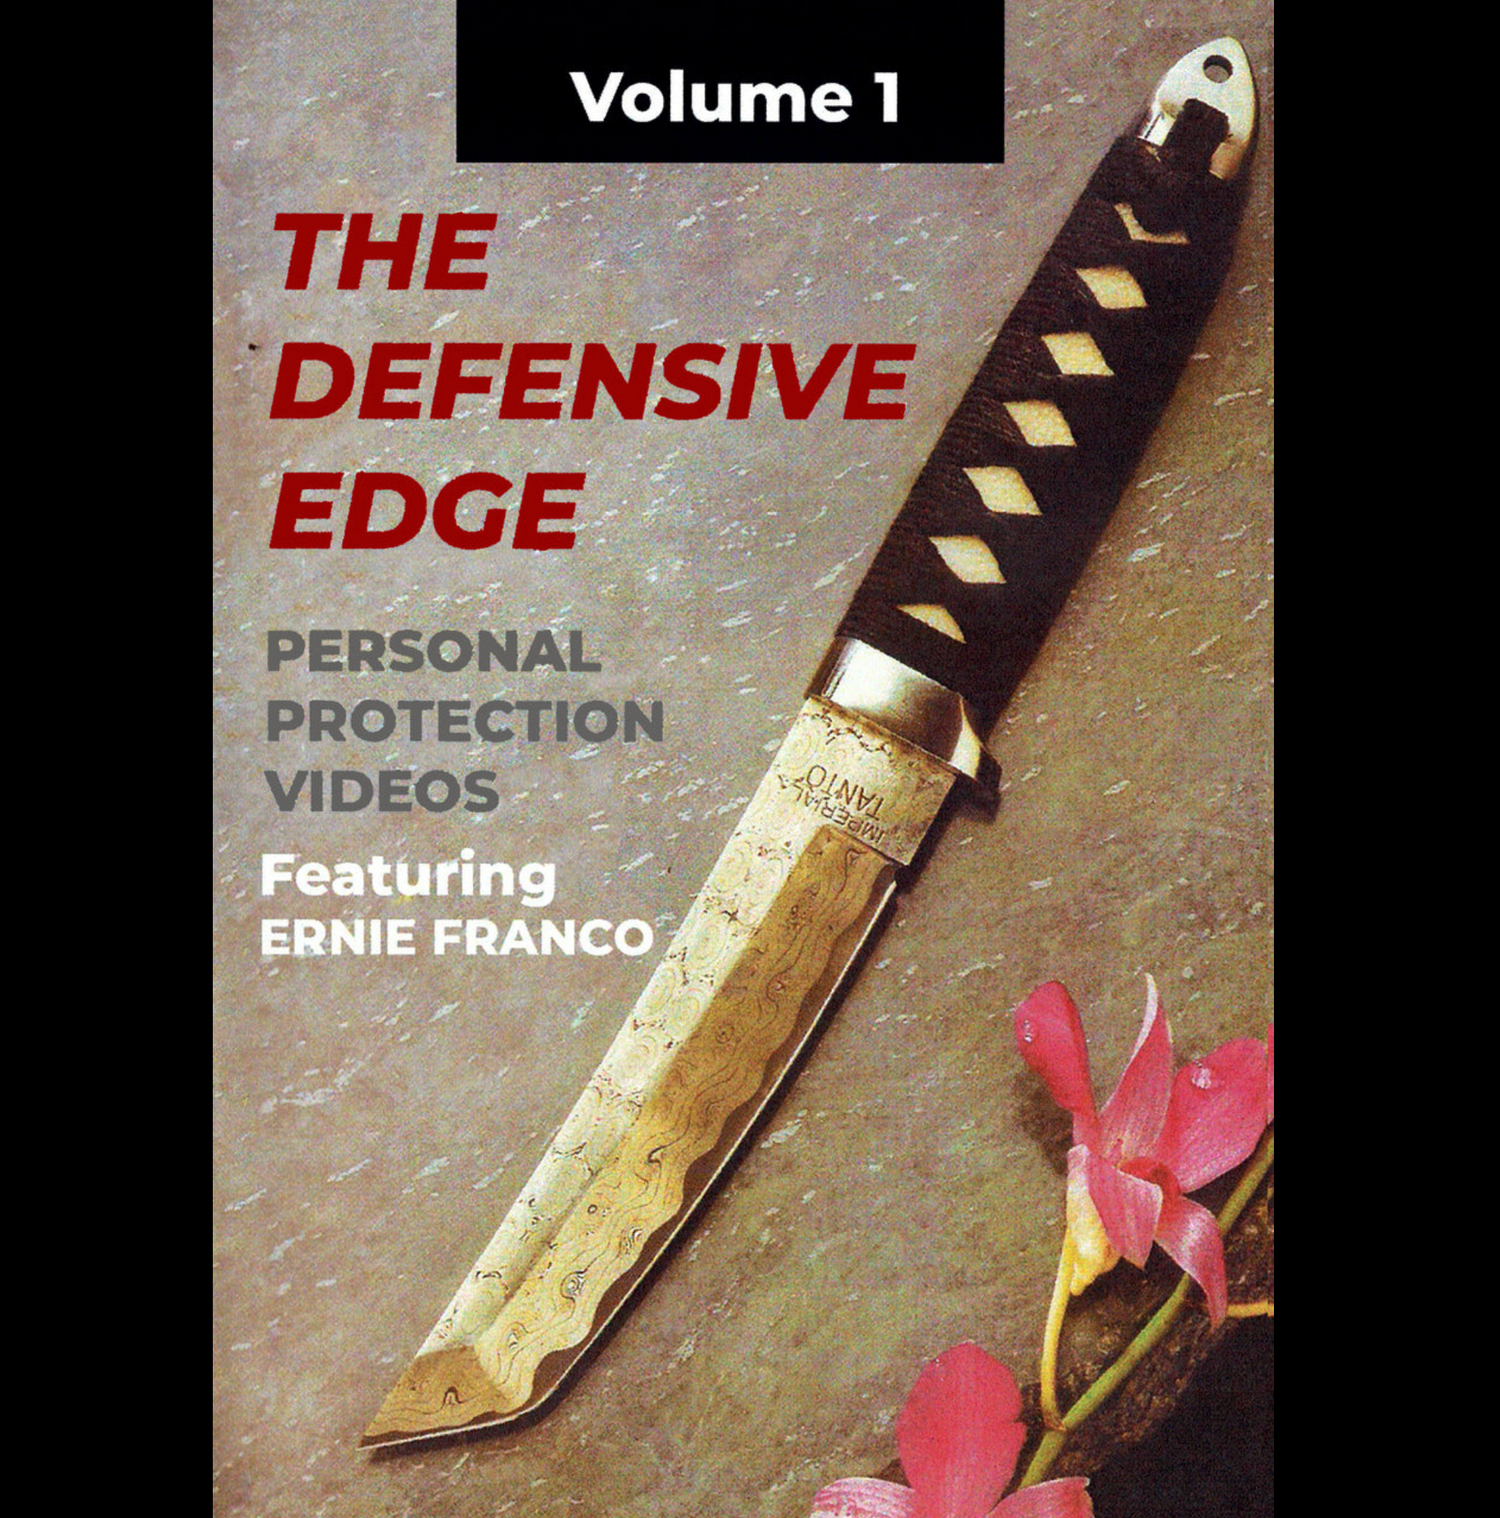 The Defensive Edge 1 de Ernie Franco (Bajo demanda)